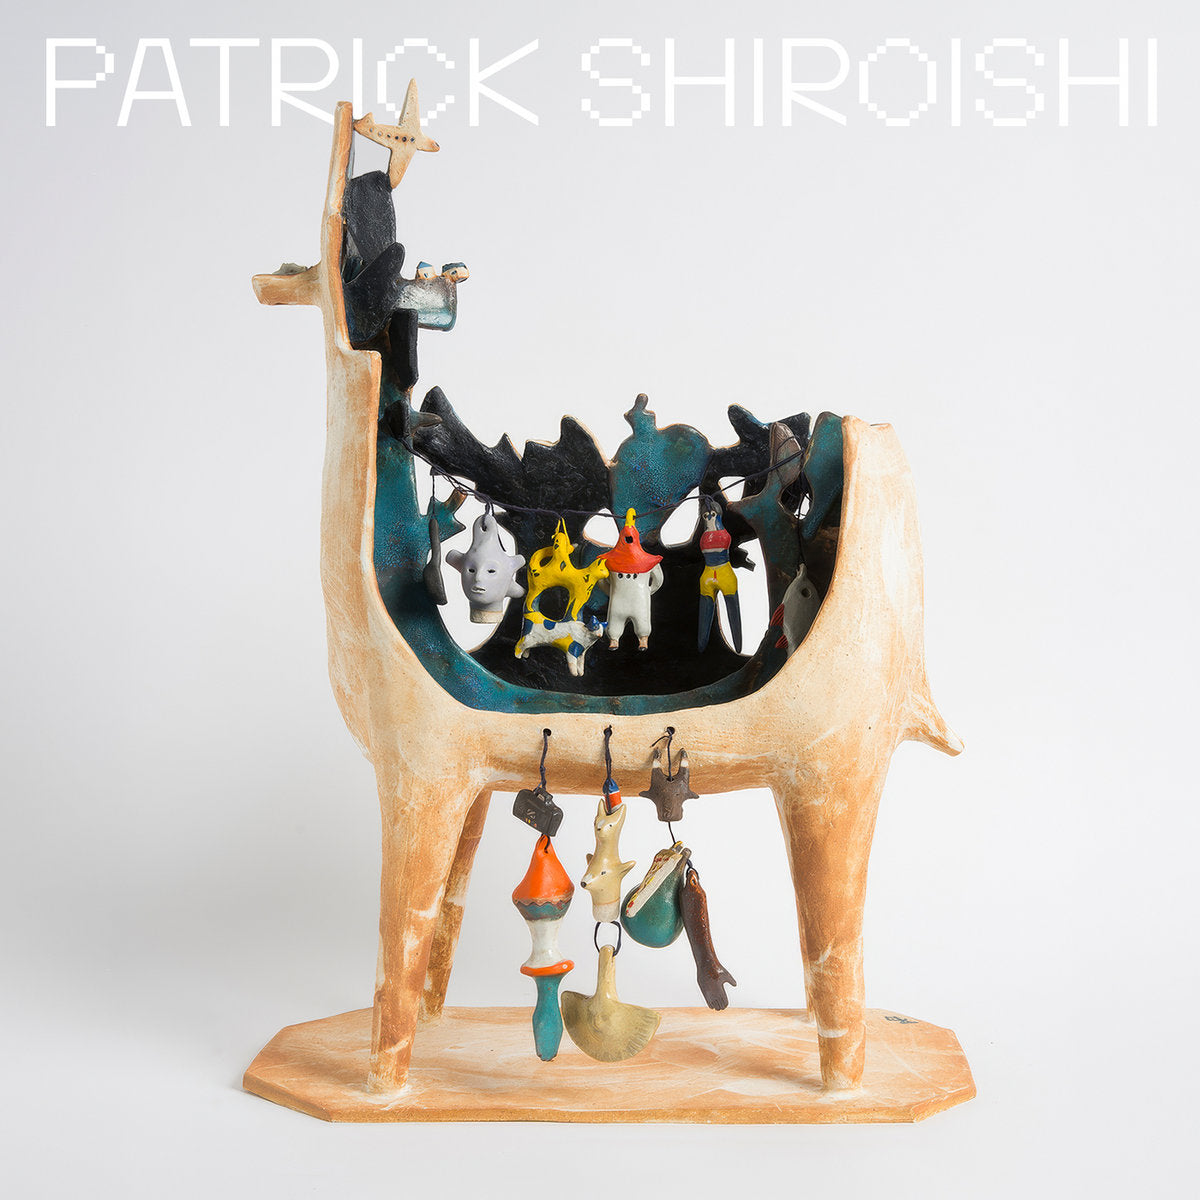 PATRICK SHIROISHI - A SPARROW IN A SWALLOW'S NEST Vinyl 7"